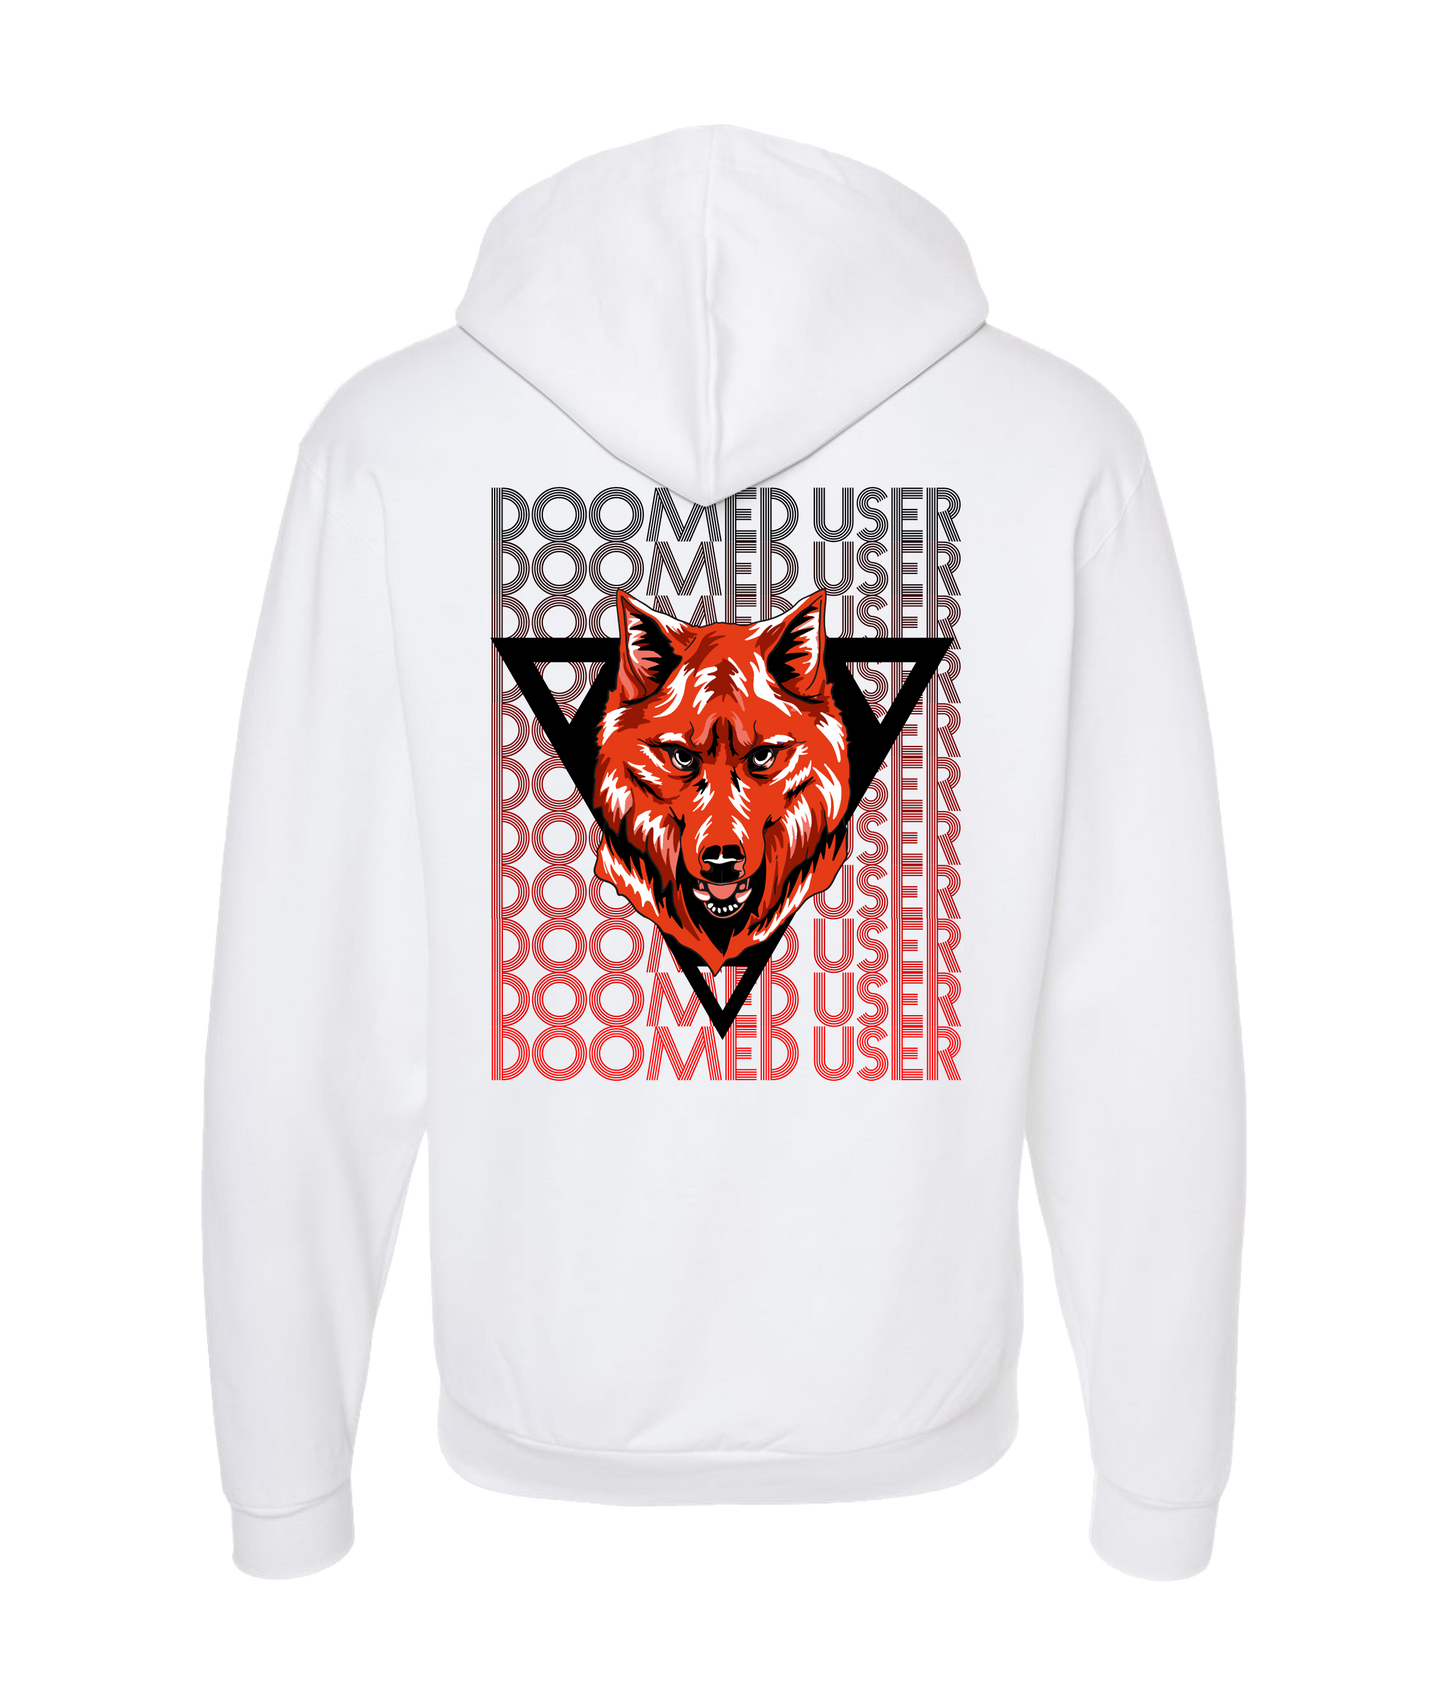 Doomed User - Wolf Red - White Zip Up Hoodie